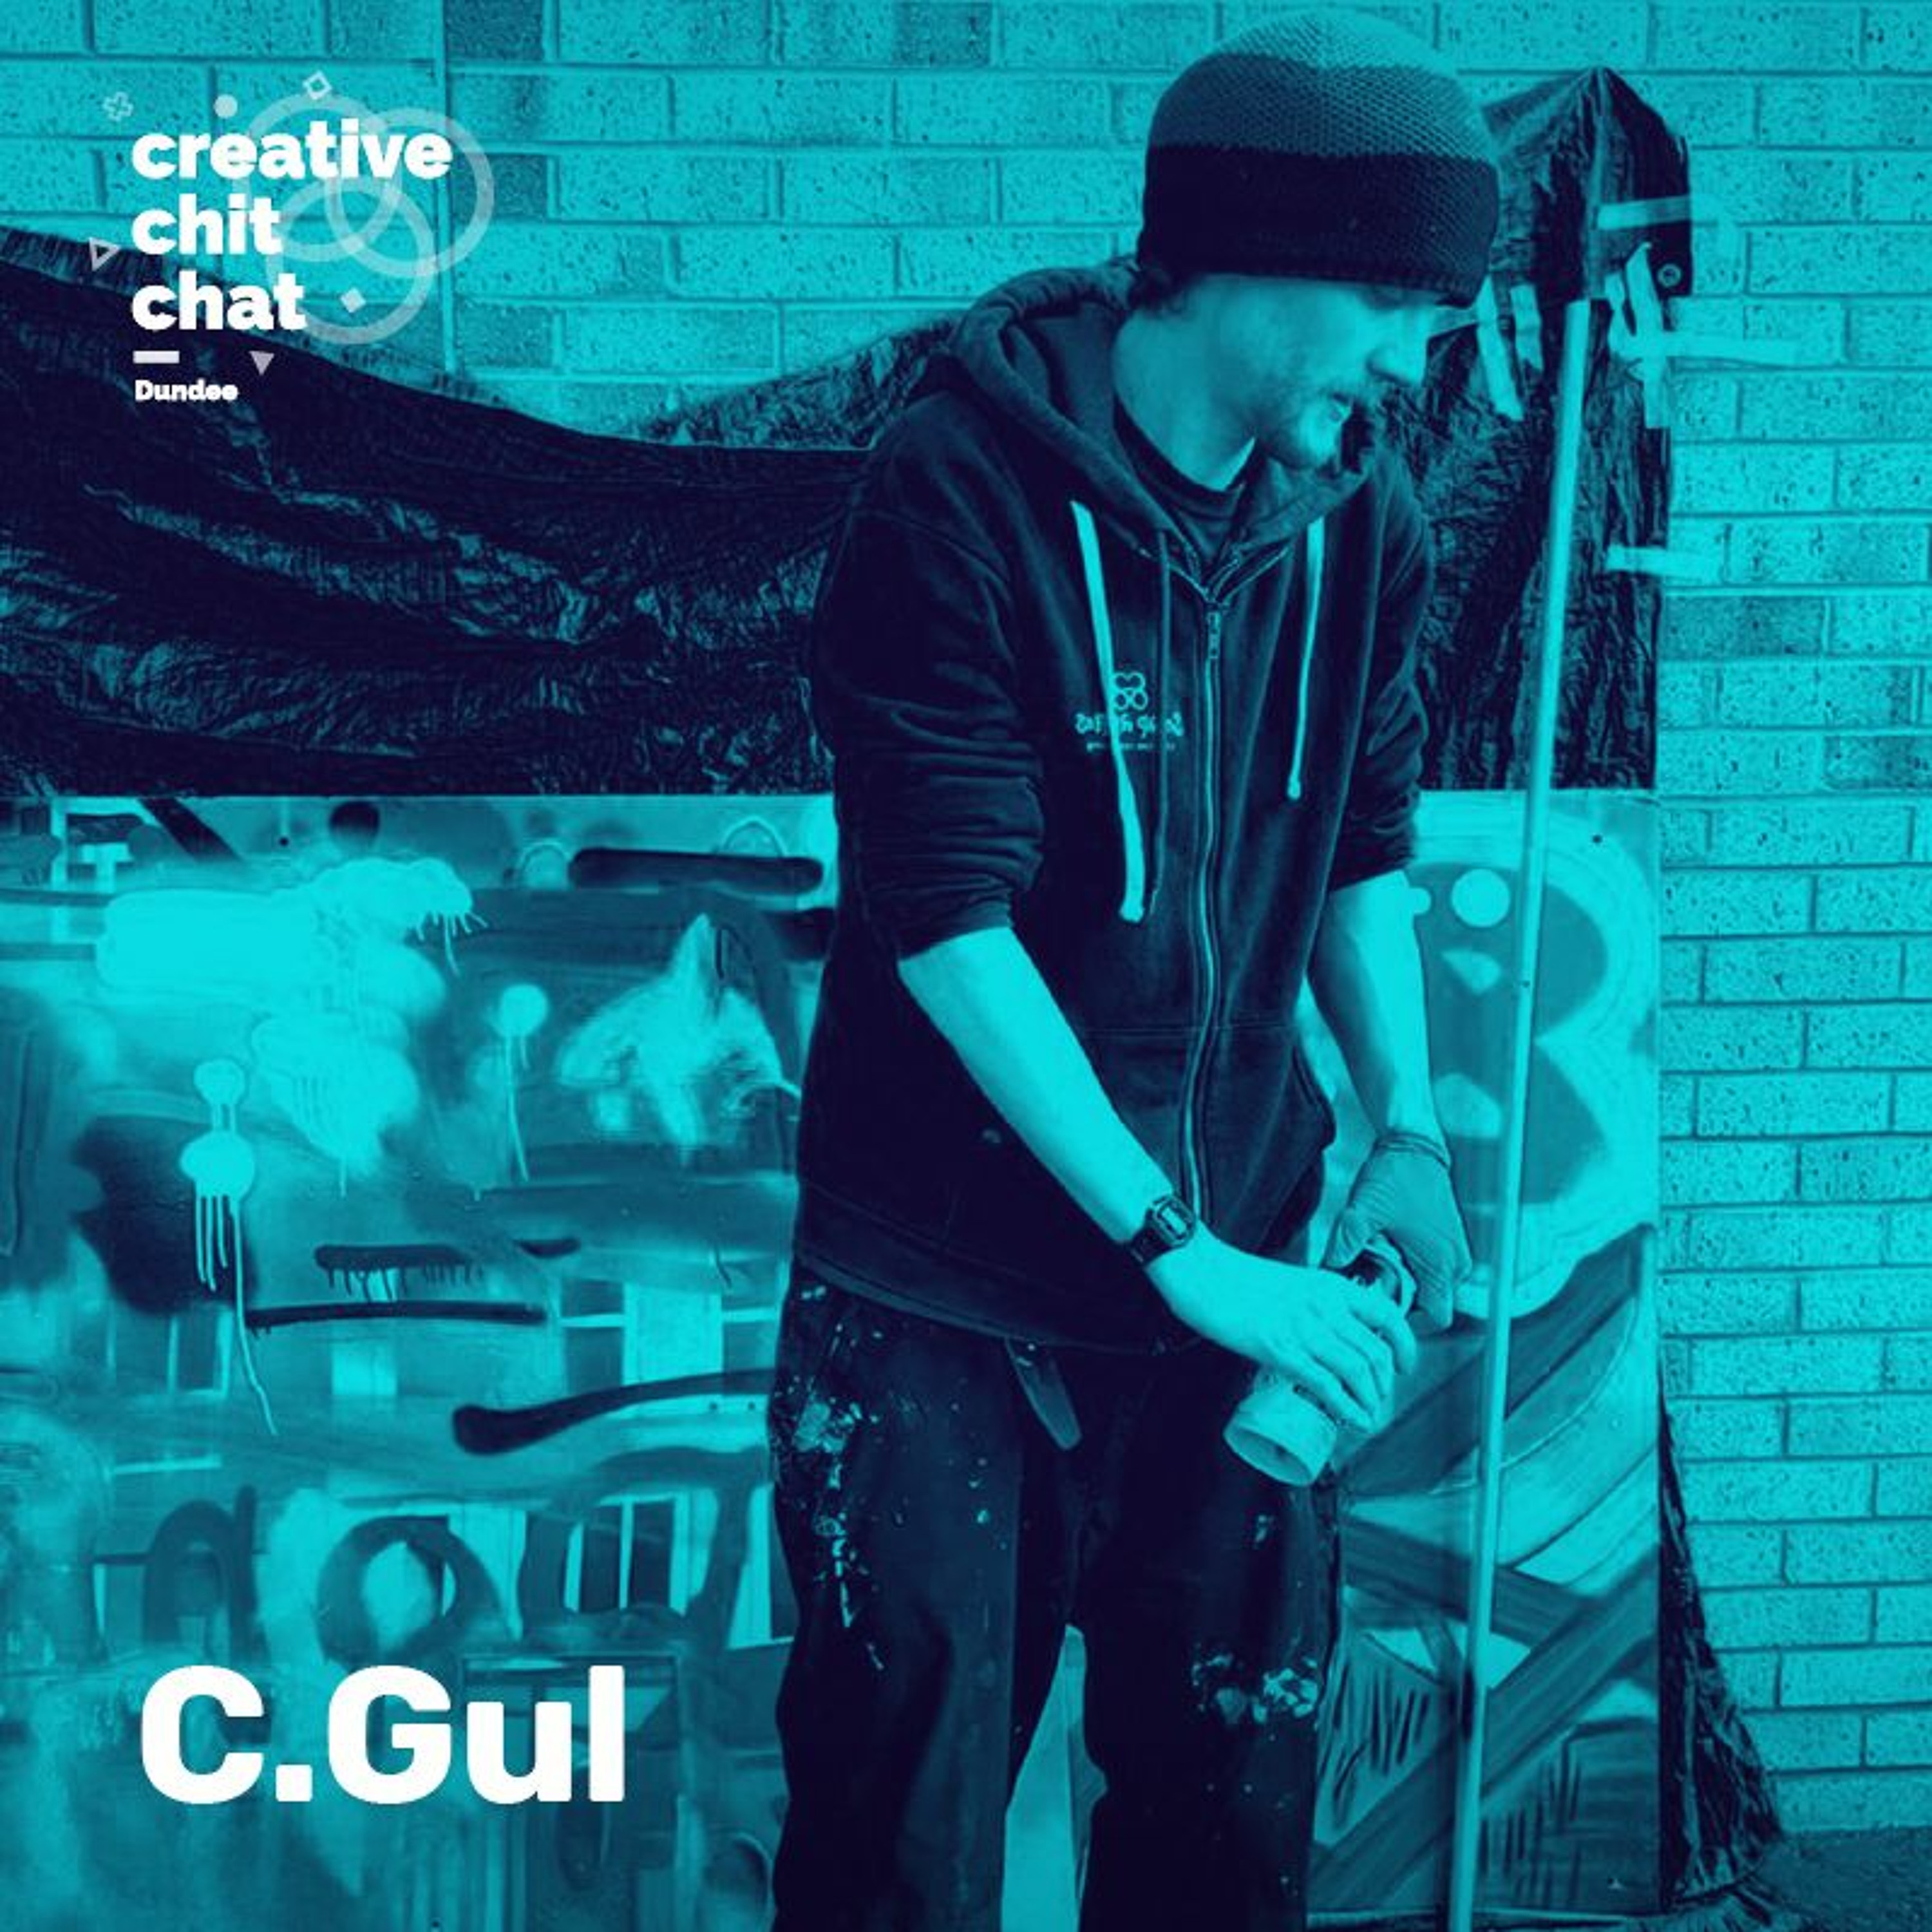 C.Gul - Reaching the peak of seagull based puns